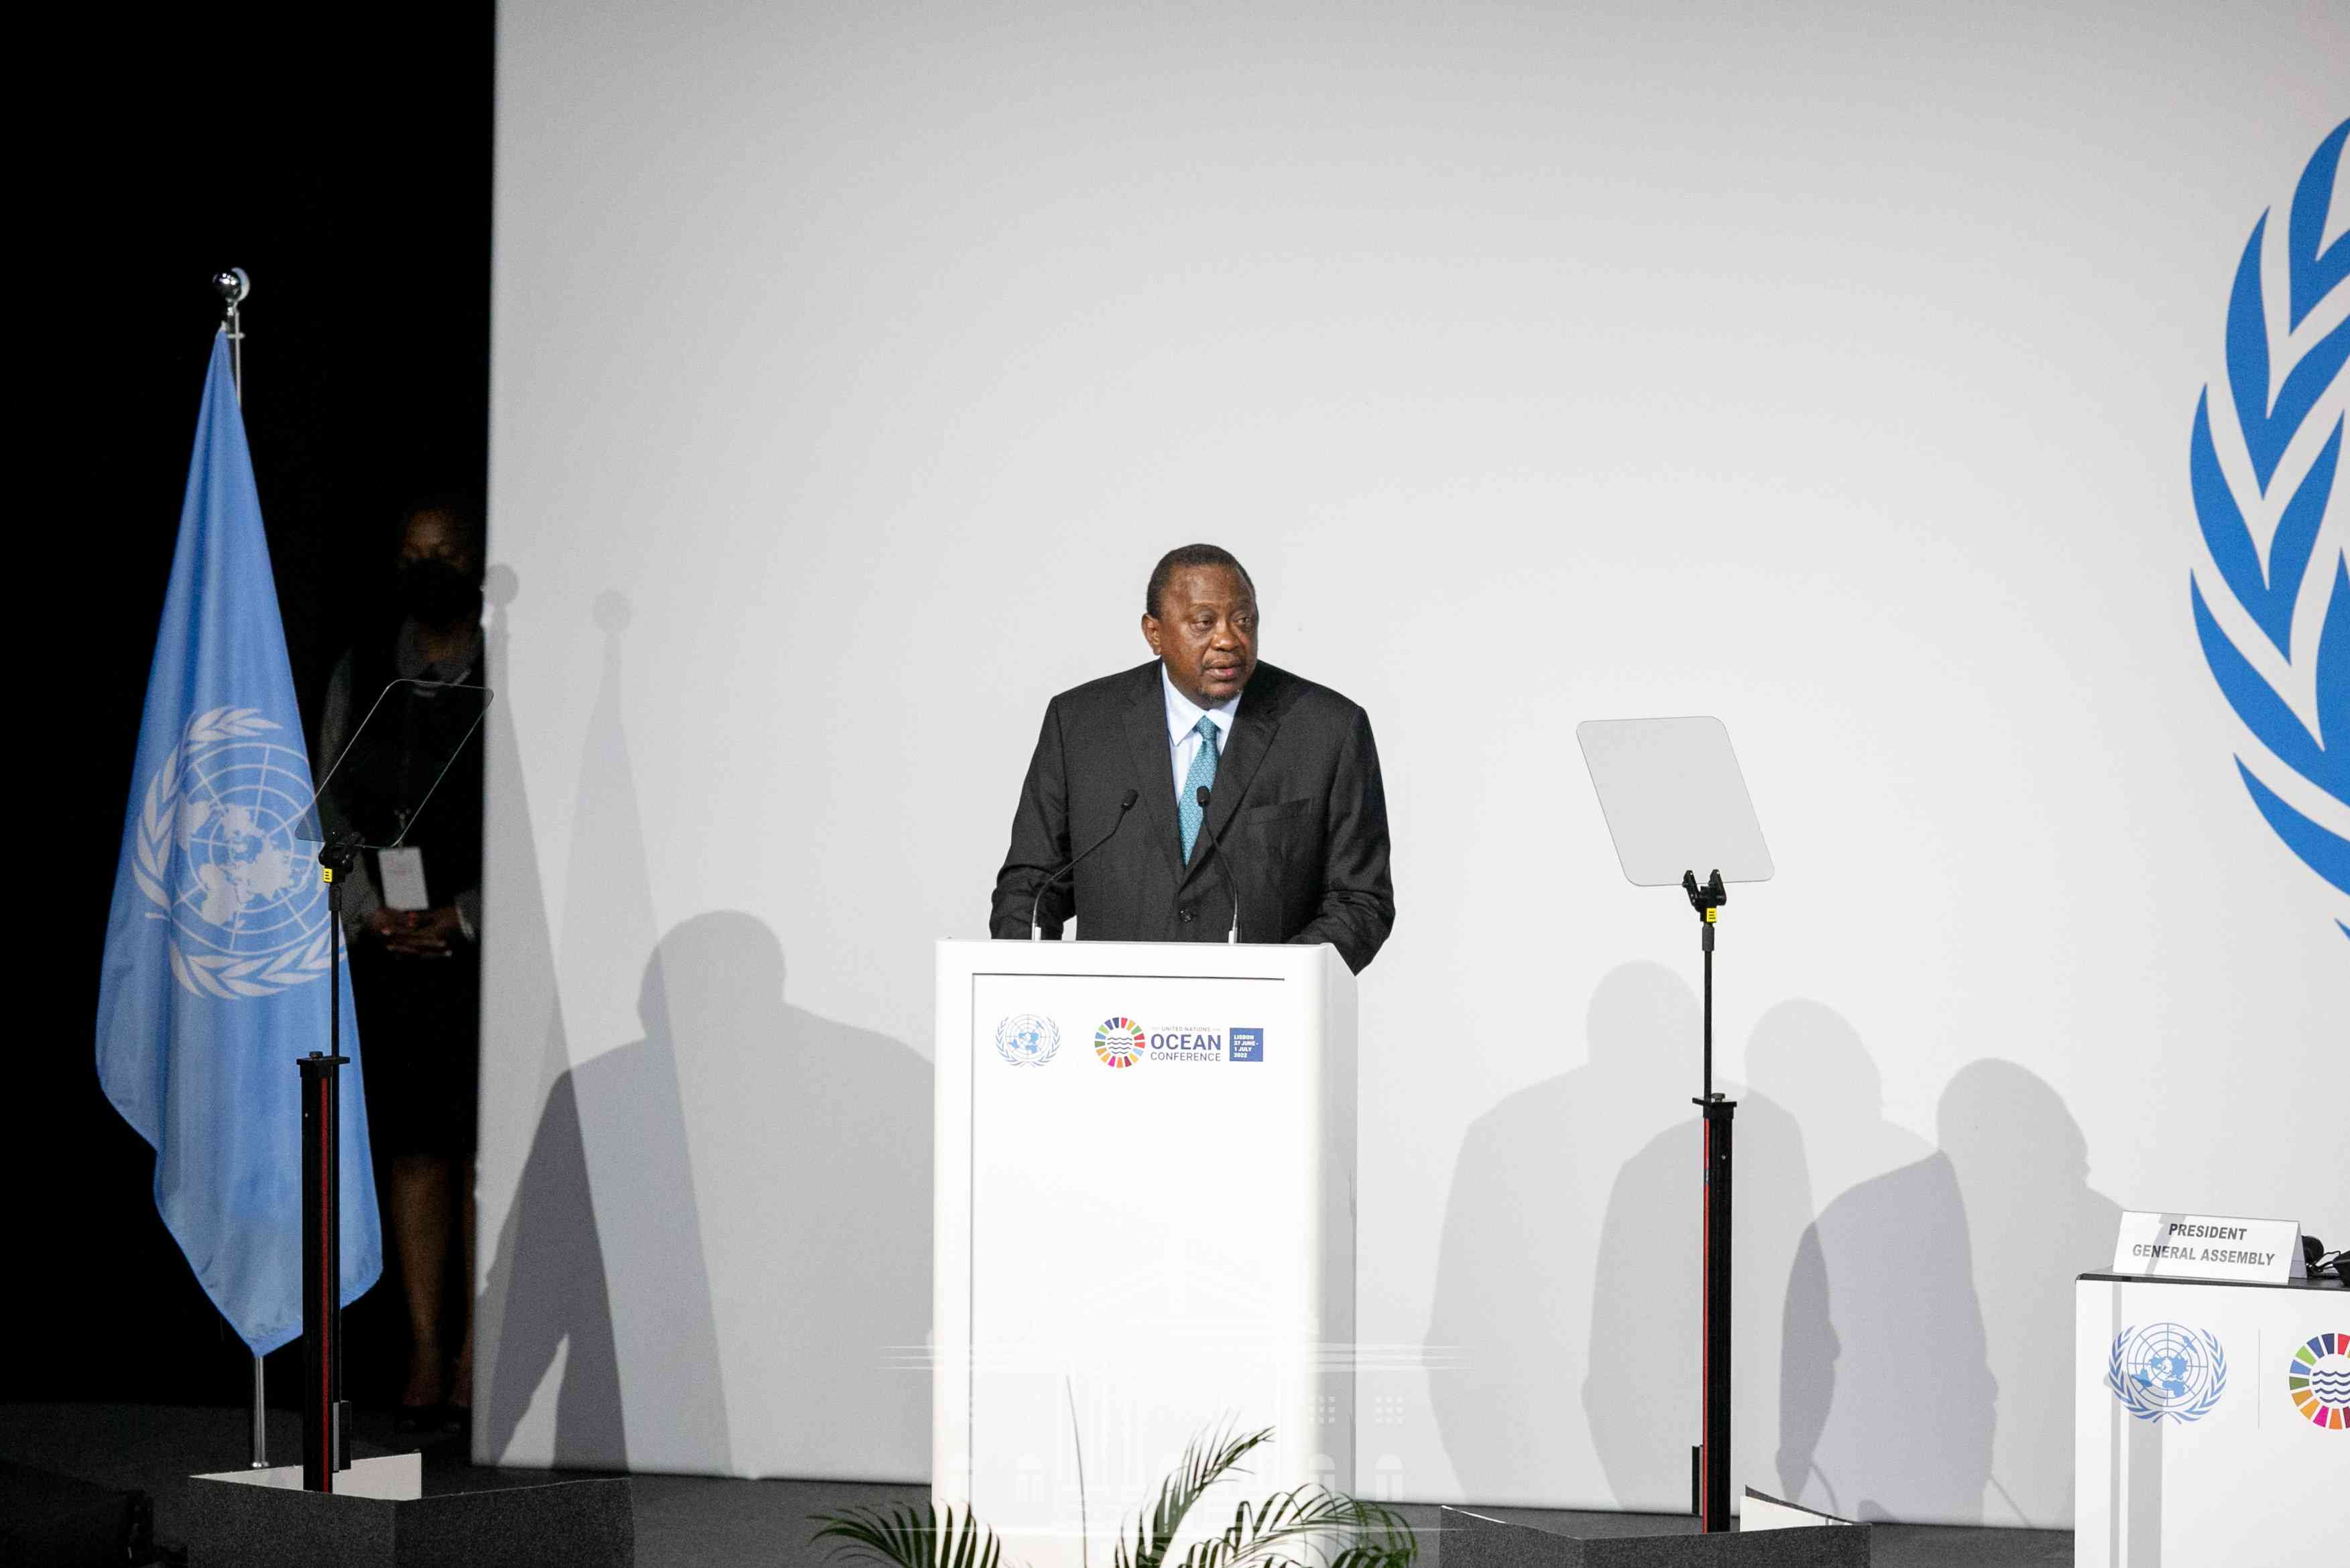 President Kenyatta calls for urgent global action to protect oceans